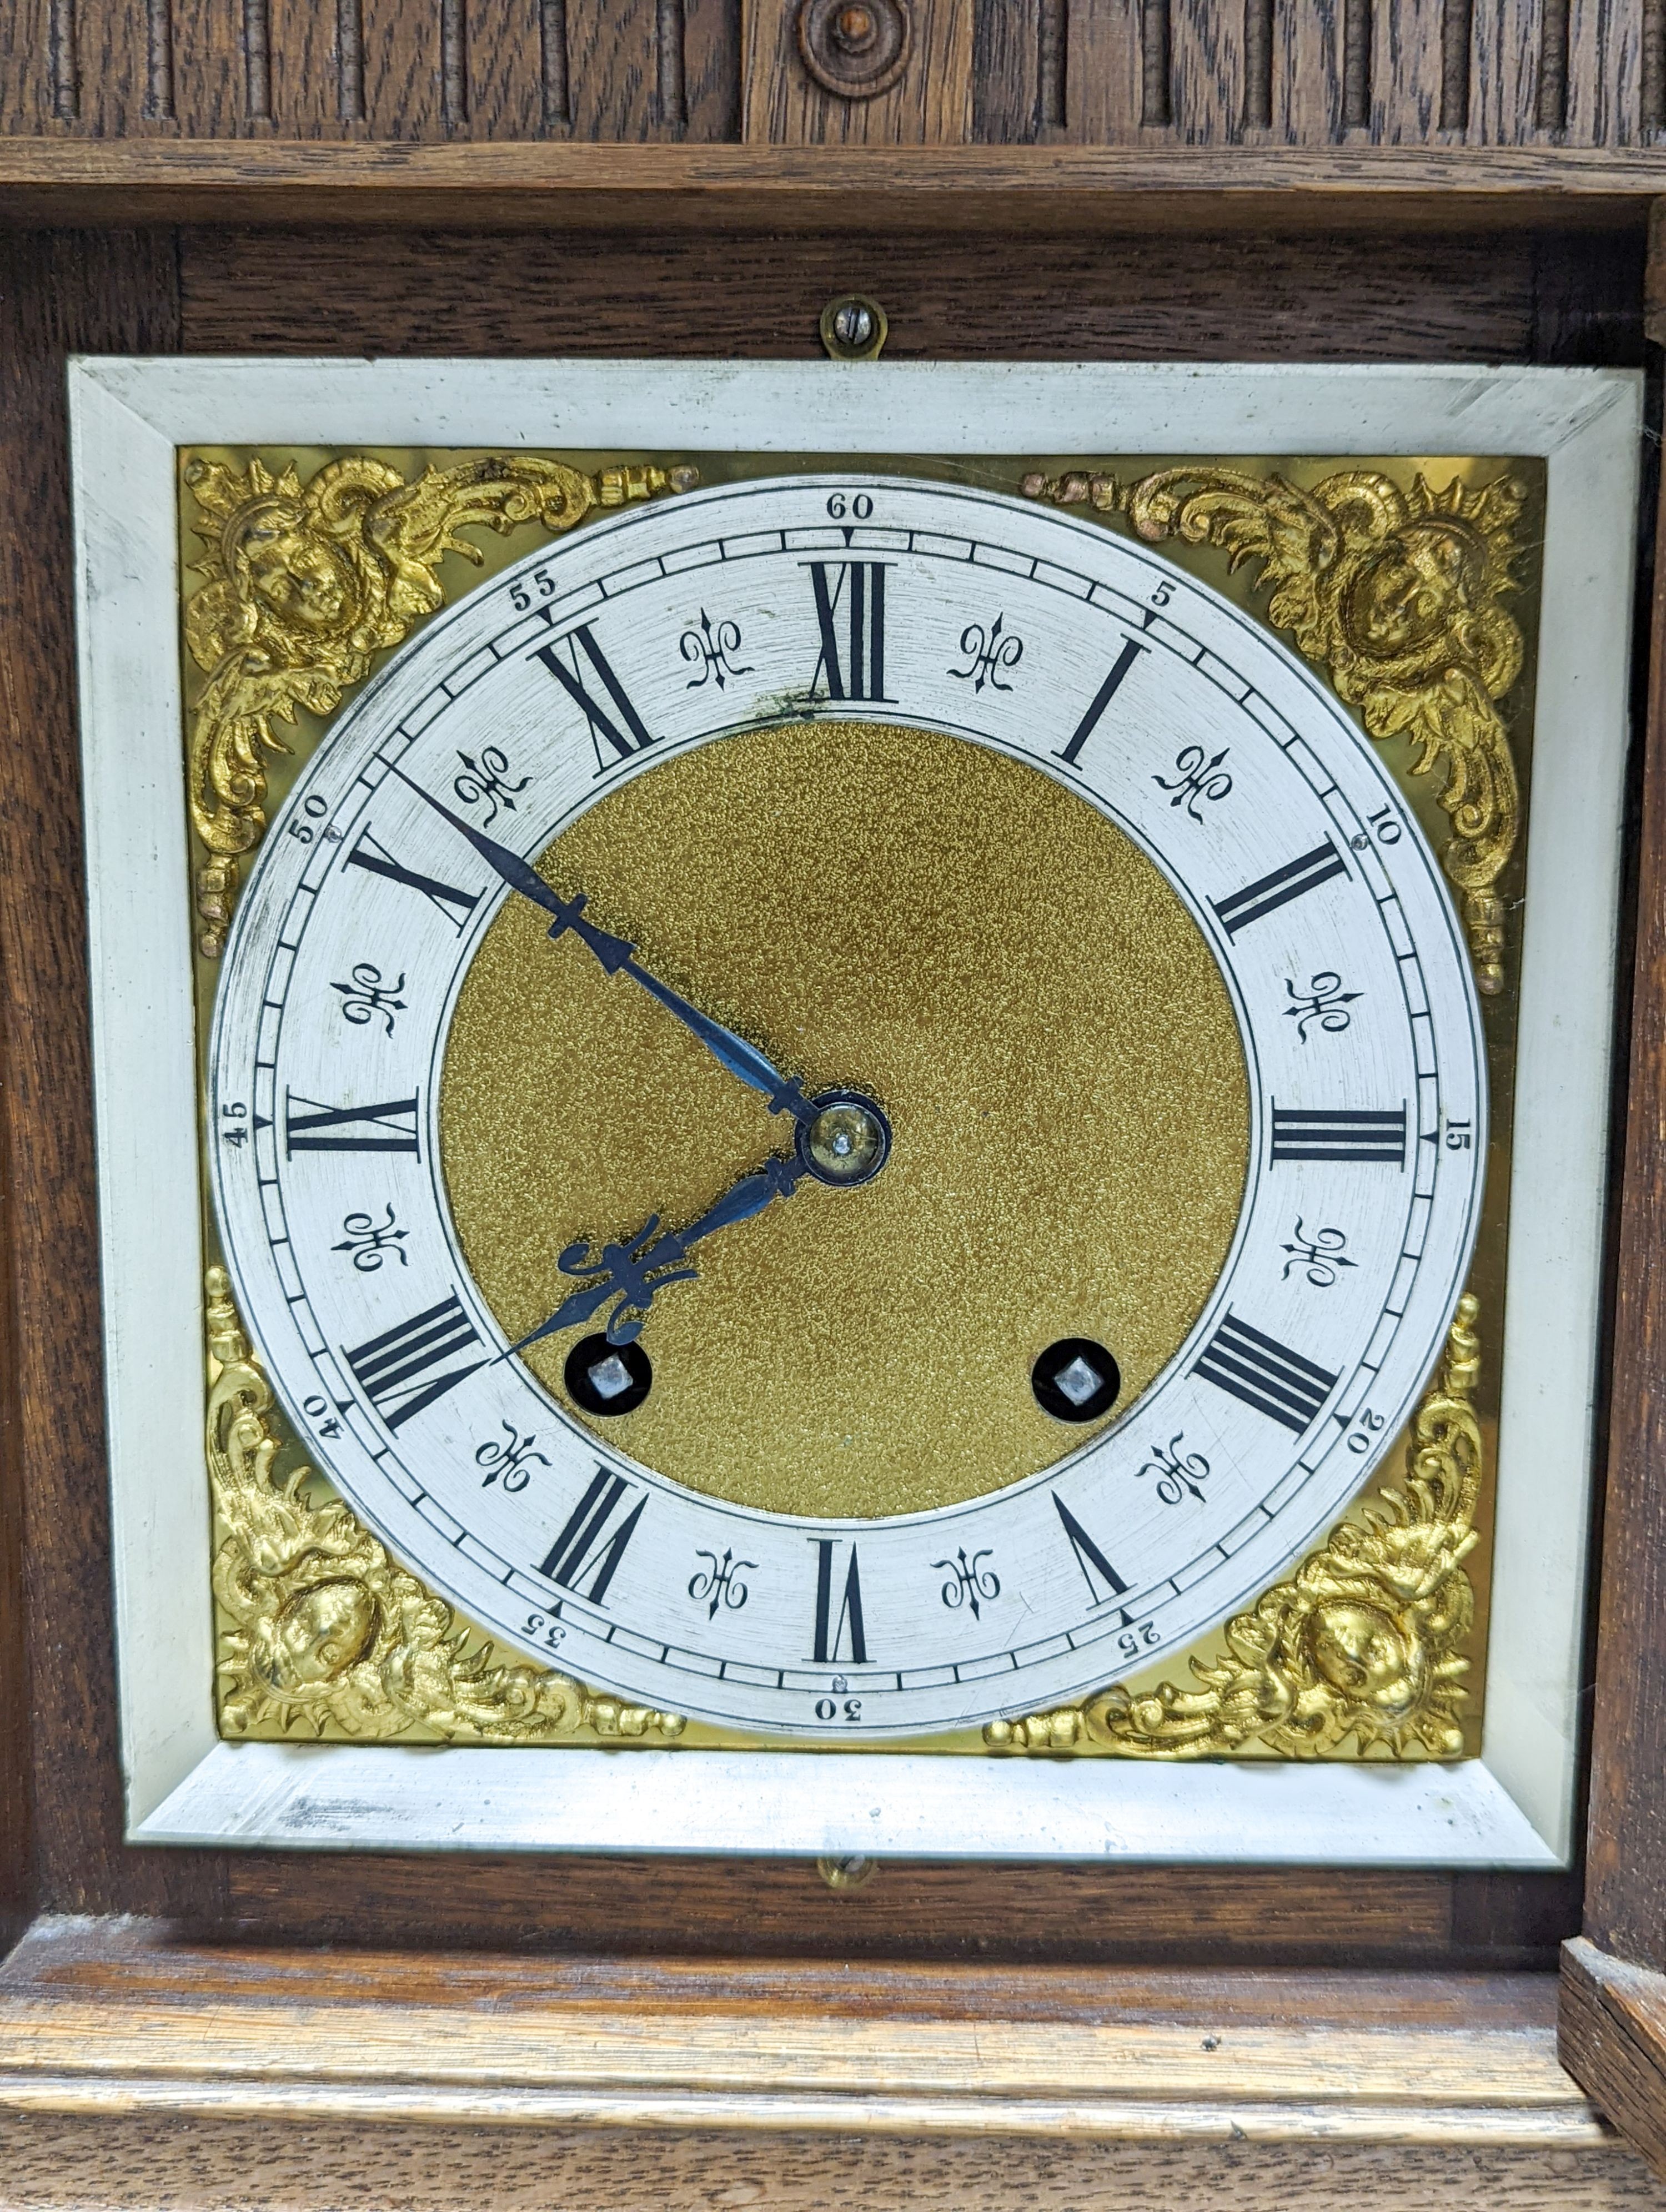 A late 19th century German oak cased eight day mantel clock